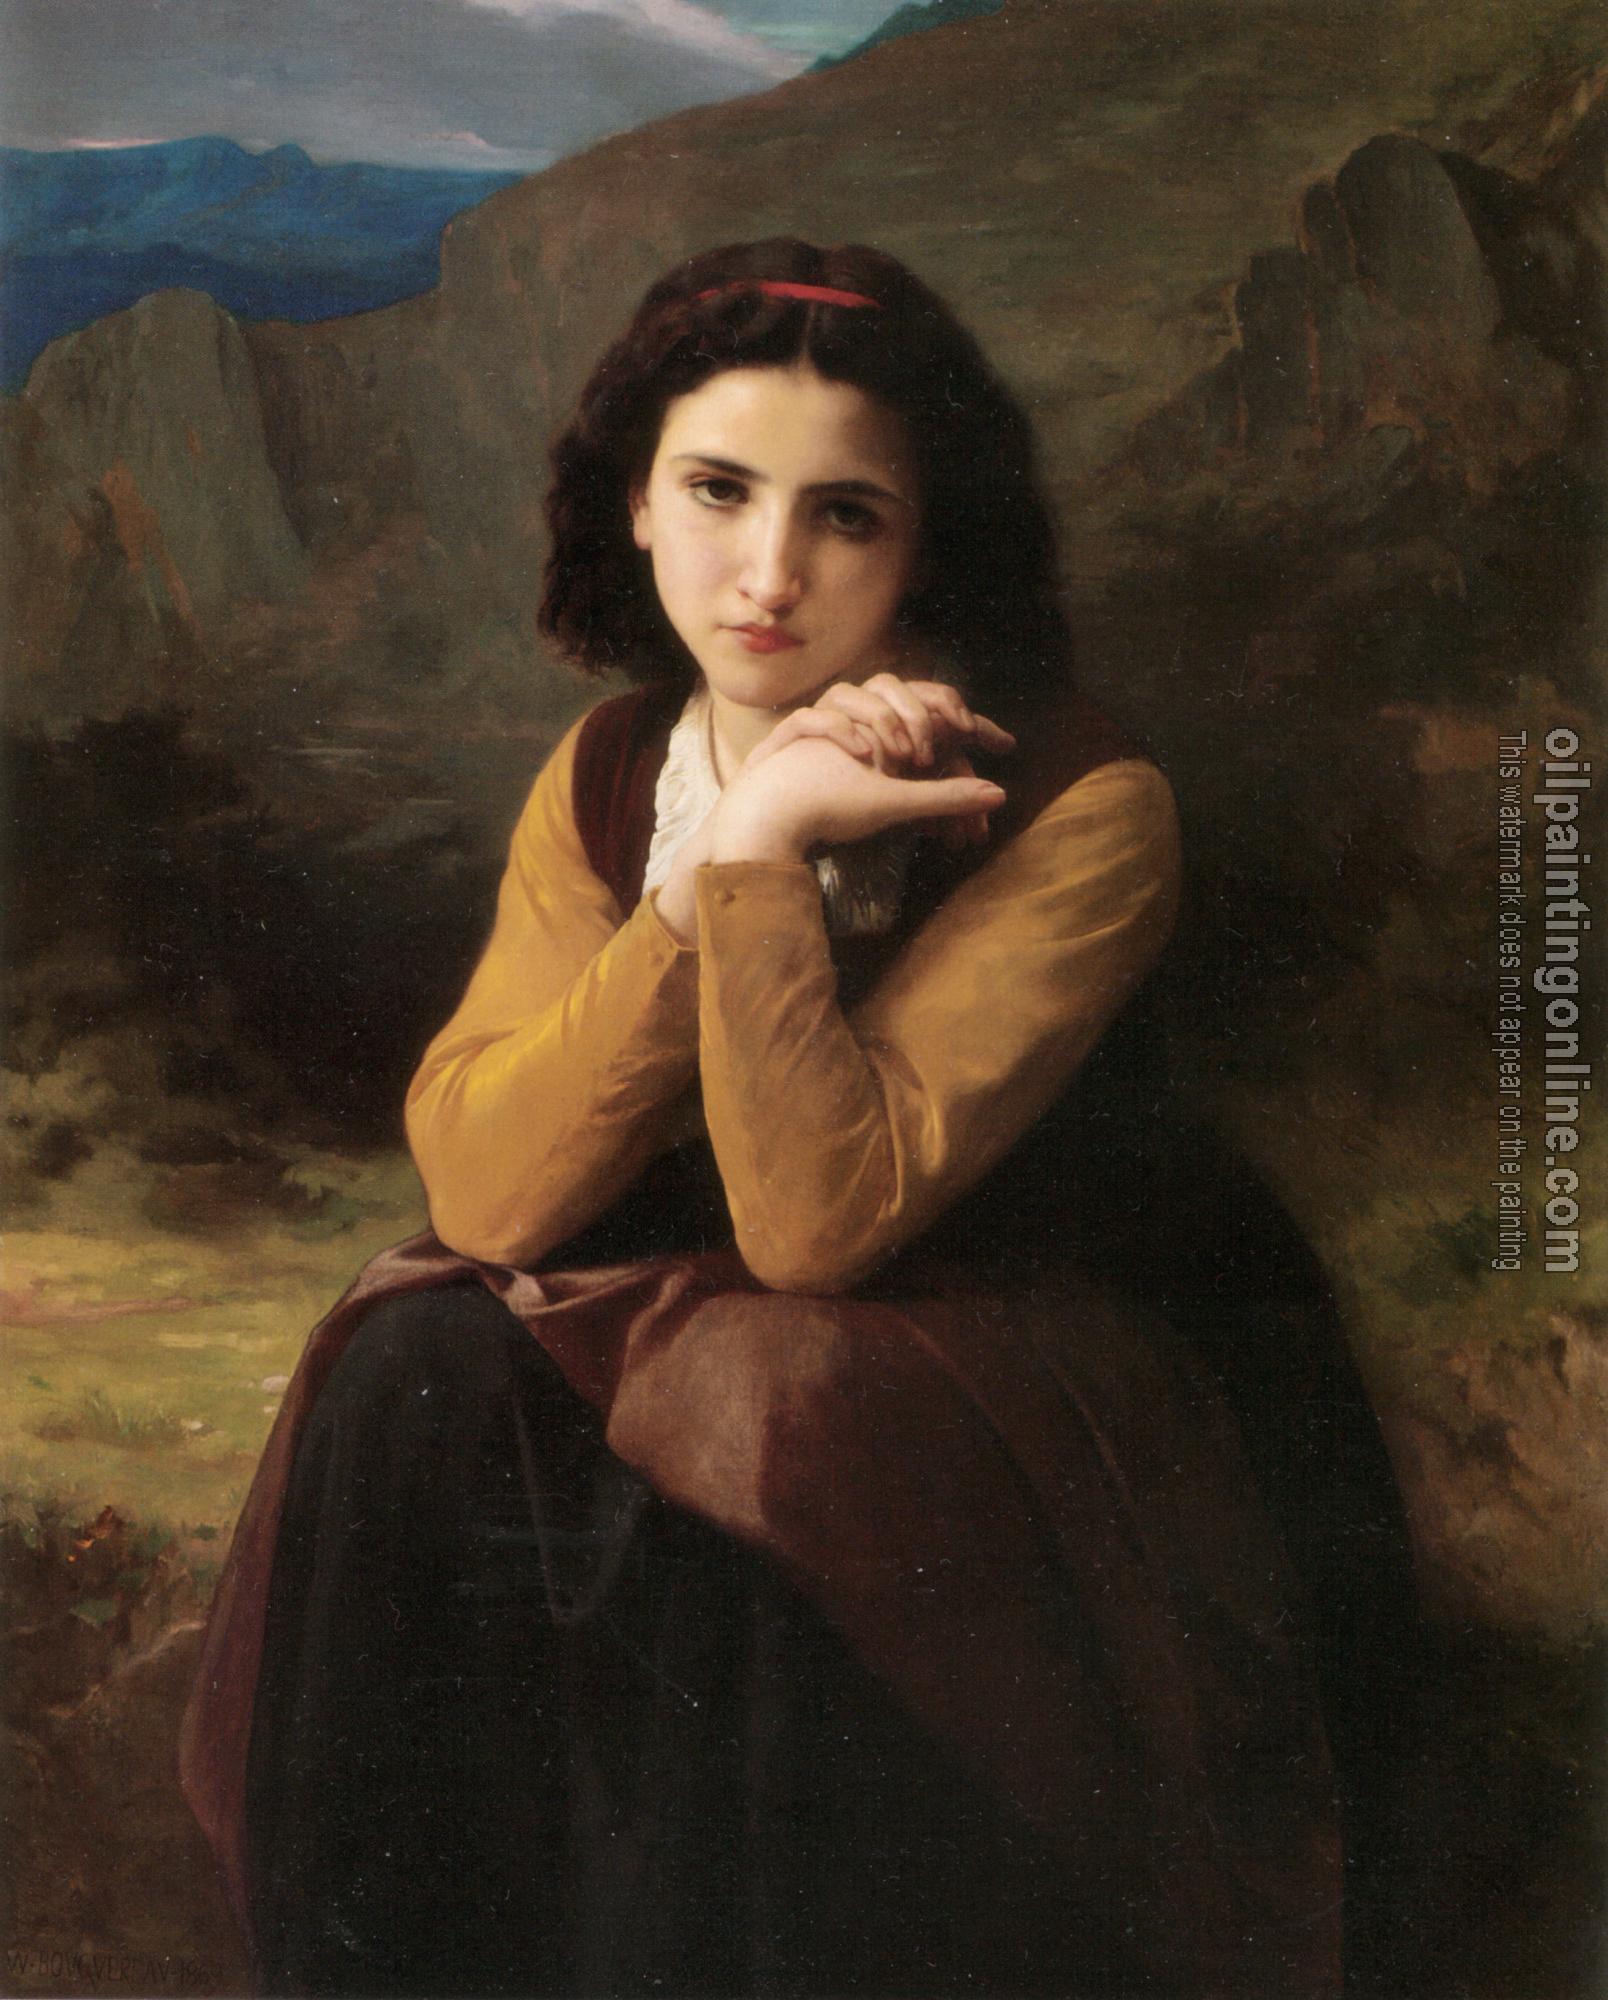 Bouguereau, William-Adolphe - Mignon